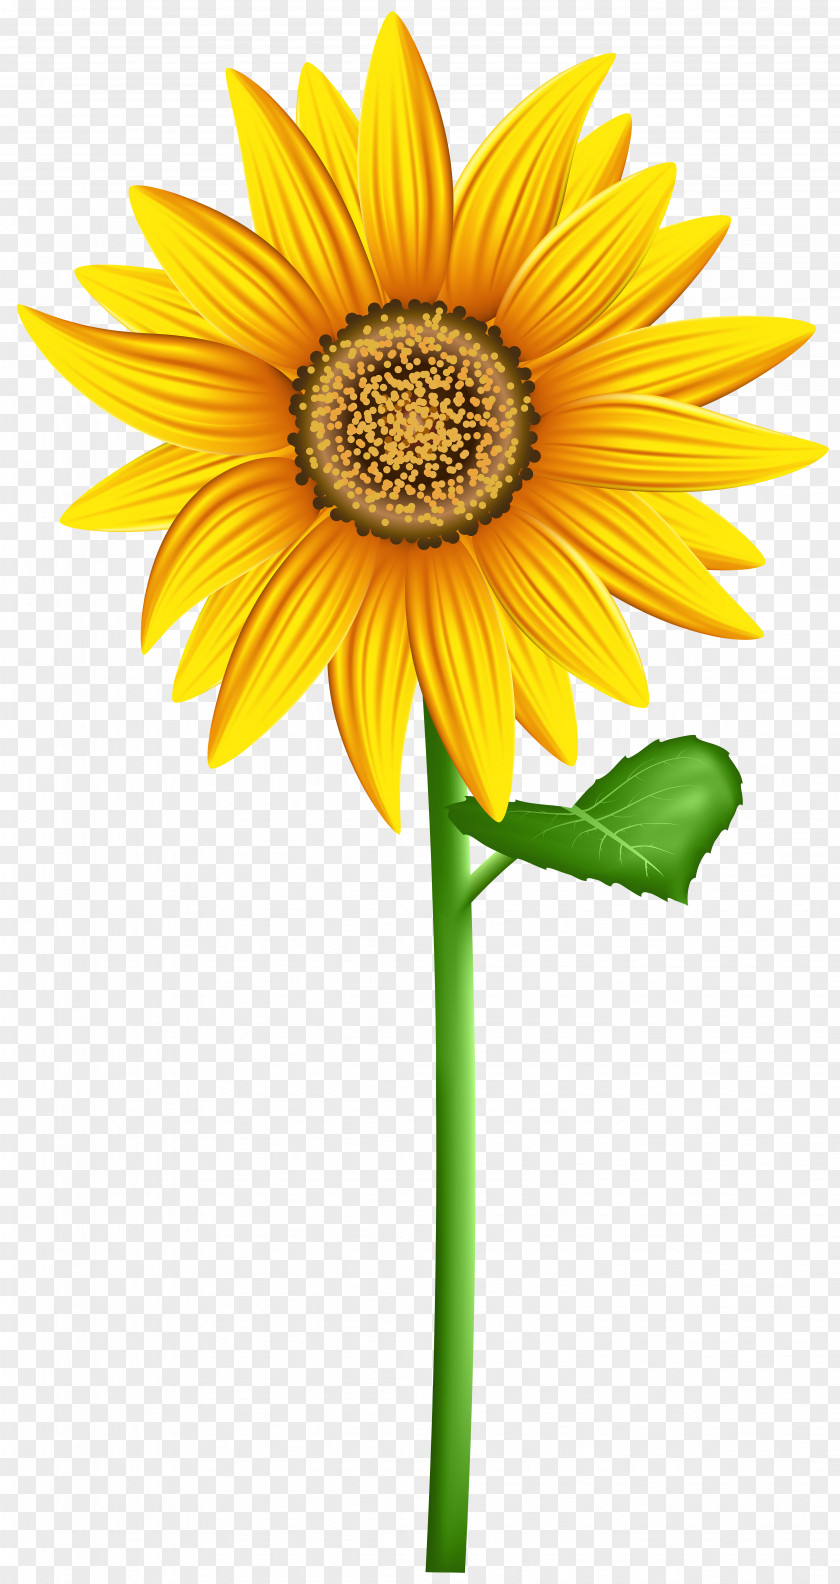 Orange Sunflower Clip Art Desktop Wallpaper Image PNG